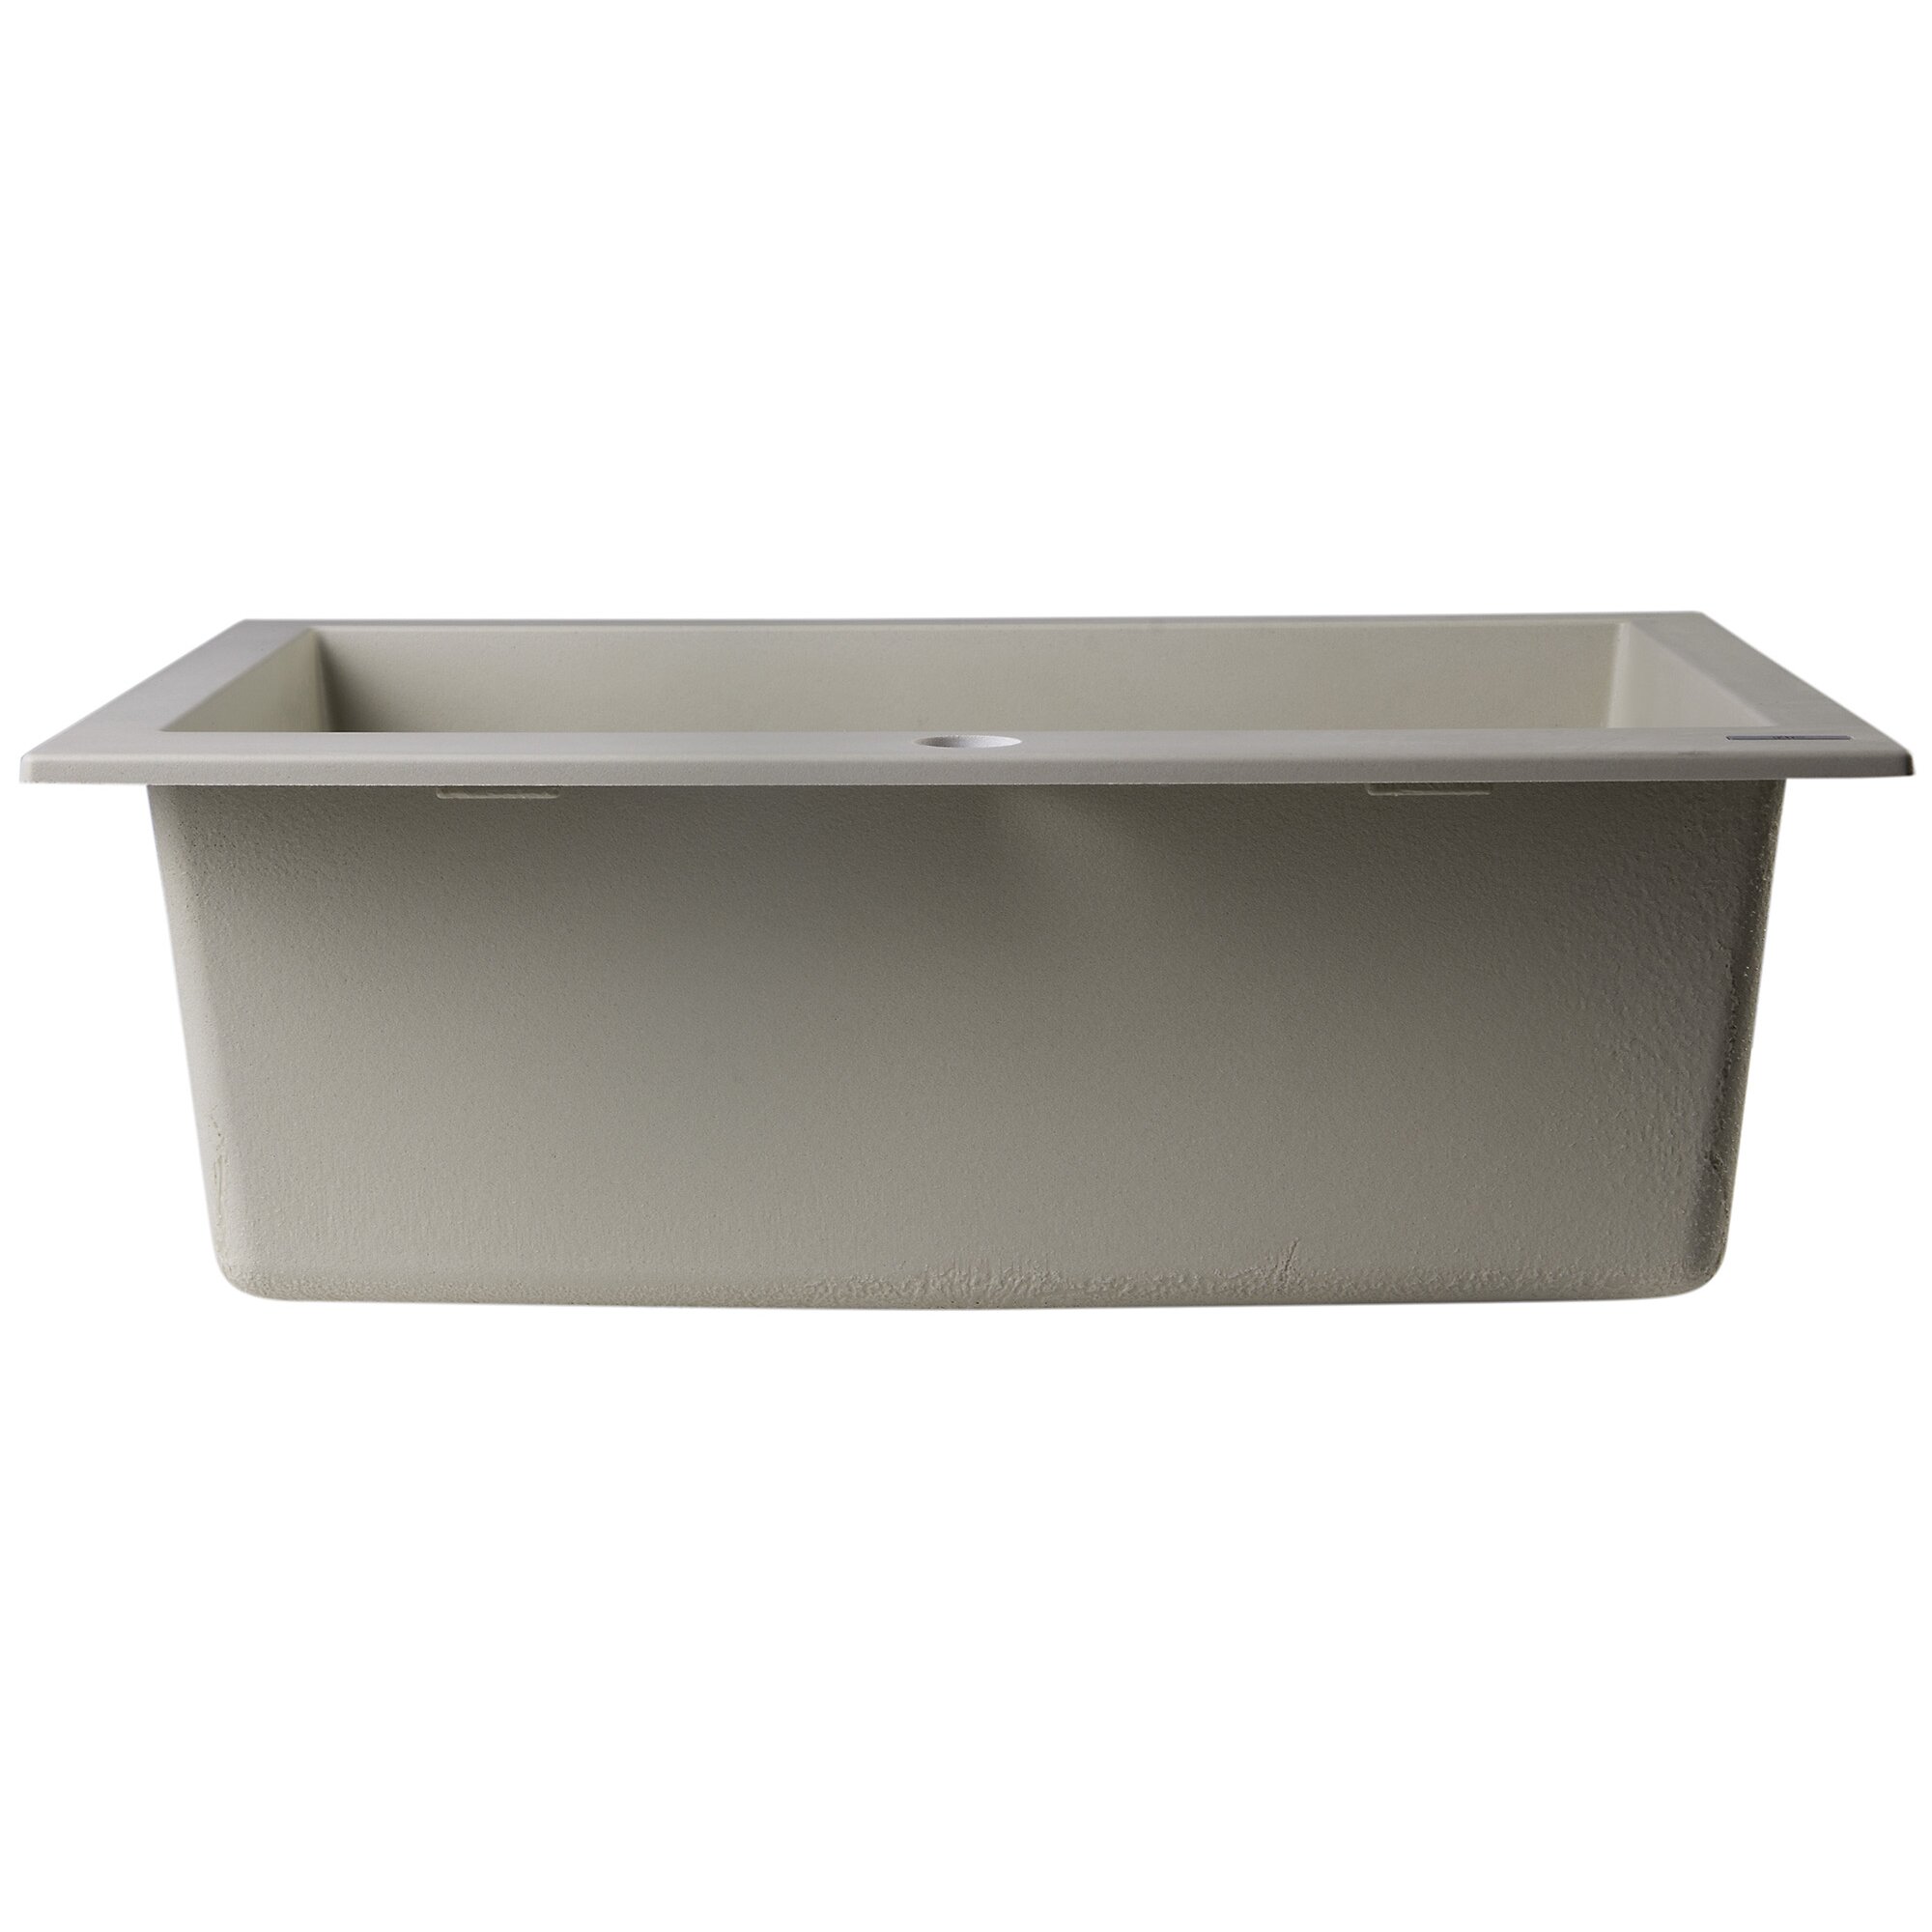 Alfi Brand 23.63 x 20.88 Drop In Single Bowl Kitchen Sink